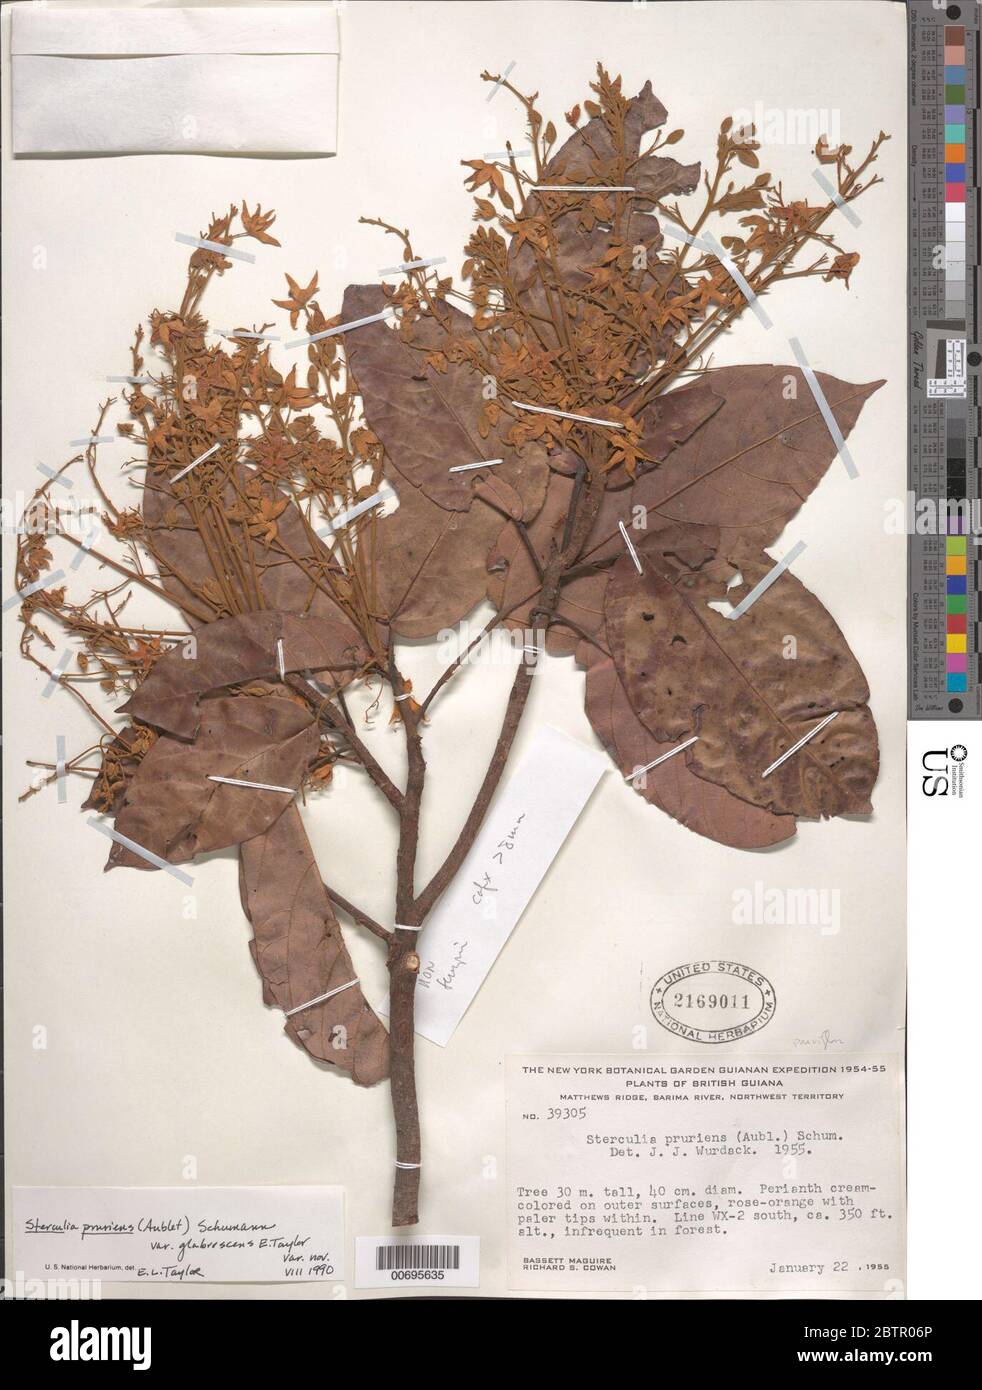 Sterculia pruriens var glabrescens EL Taylor. Stock Photo